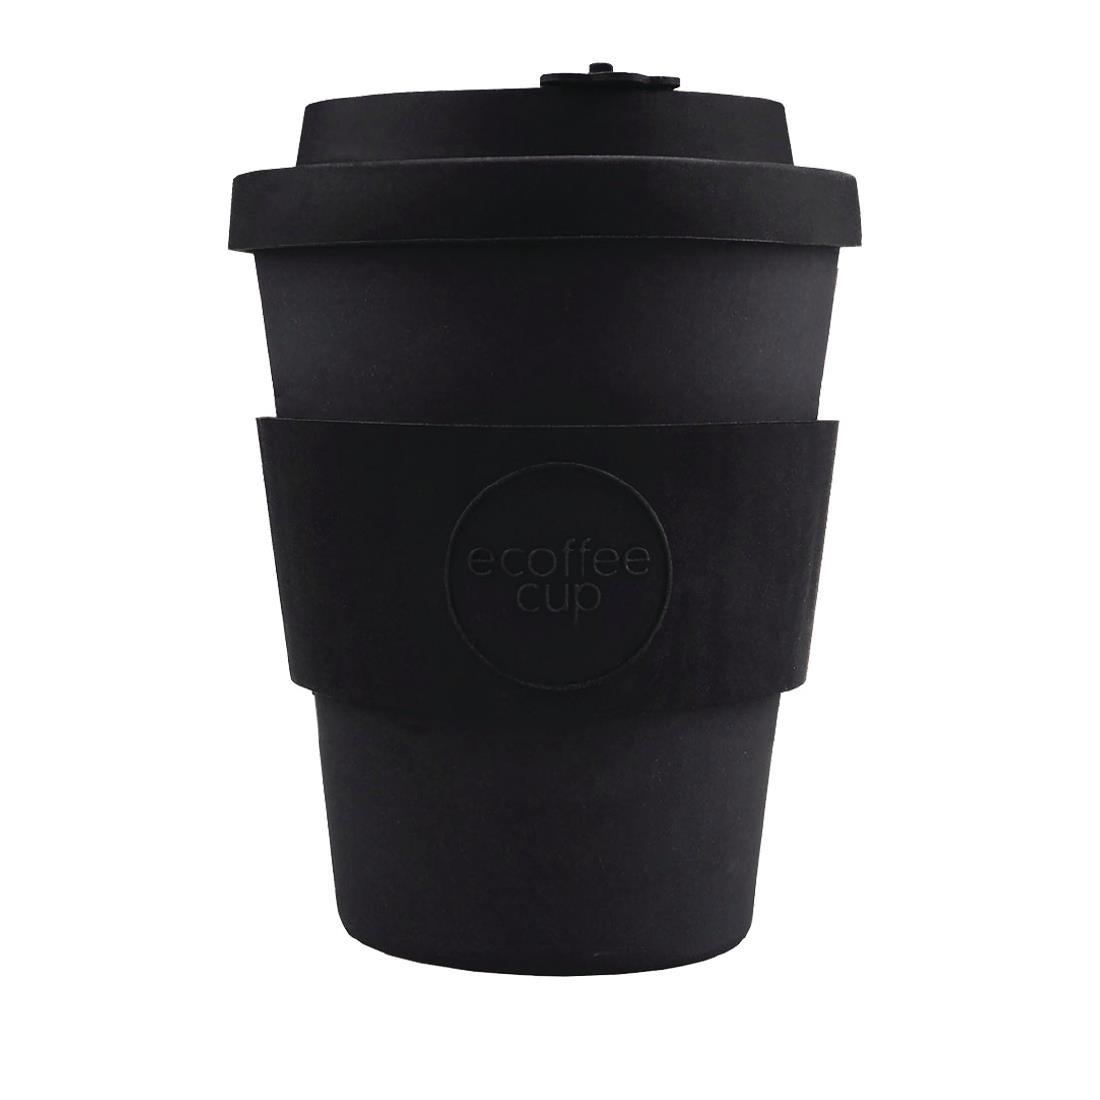 Ecoffee Cup Bamboo Reusable Coffee Cup Kerr & Napier Black 12oz - DY487  - 1